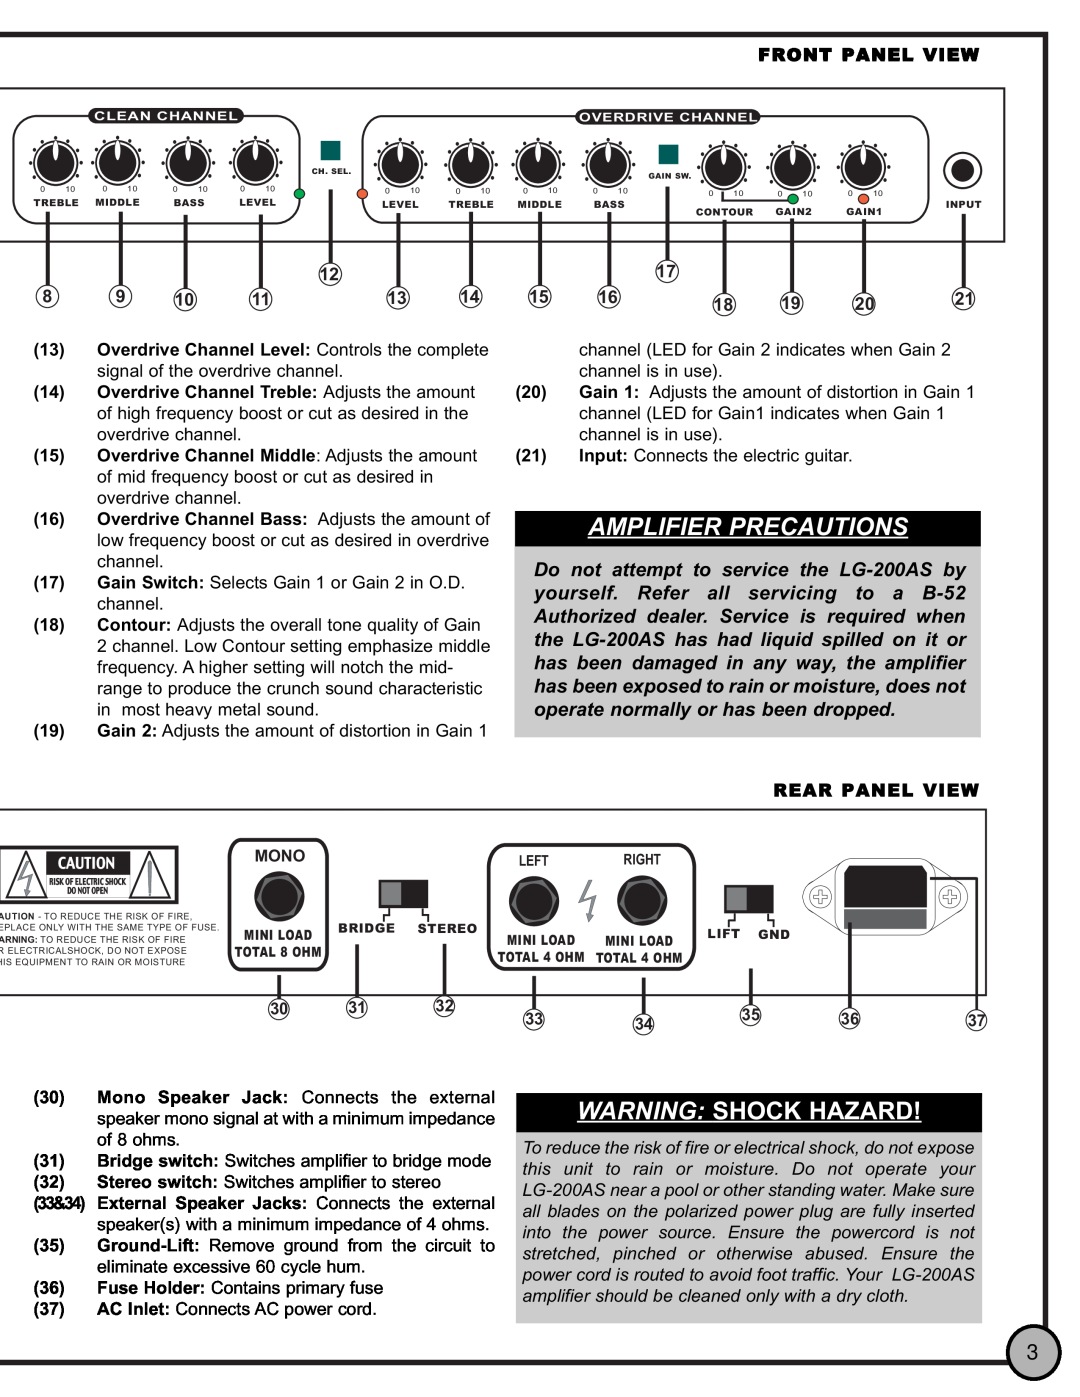 ETI Sound Systems, INC LG-200AS manual Amplifier Precautions, Warning Shock Hazard 